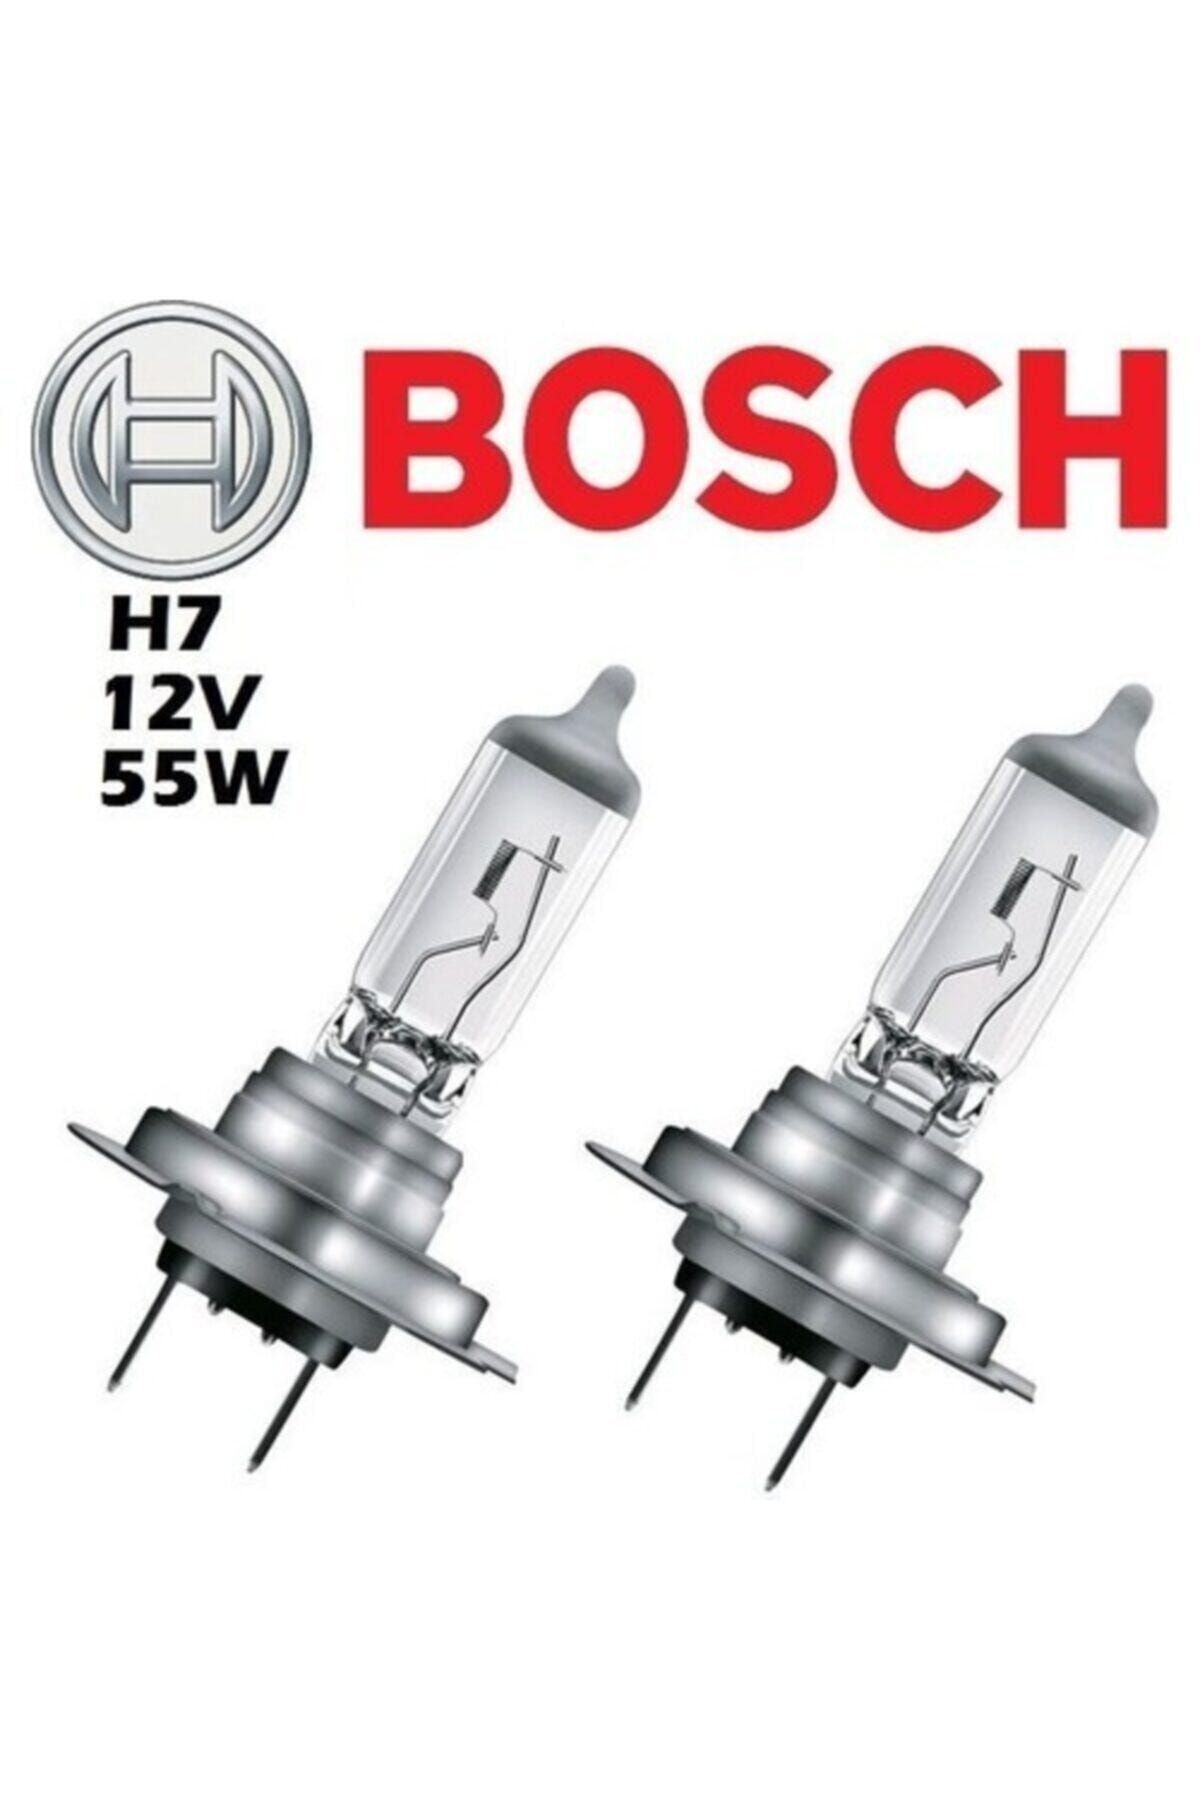 Bosch H7 12v 55w Far Ampülü 2 Adet Fiyatı, Yorumları - Trendyol